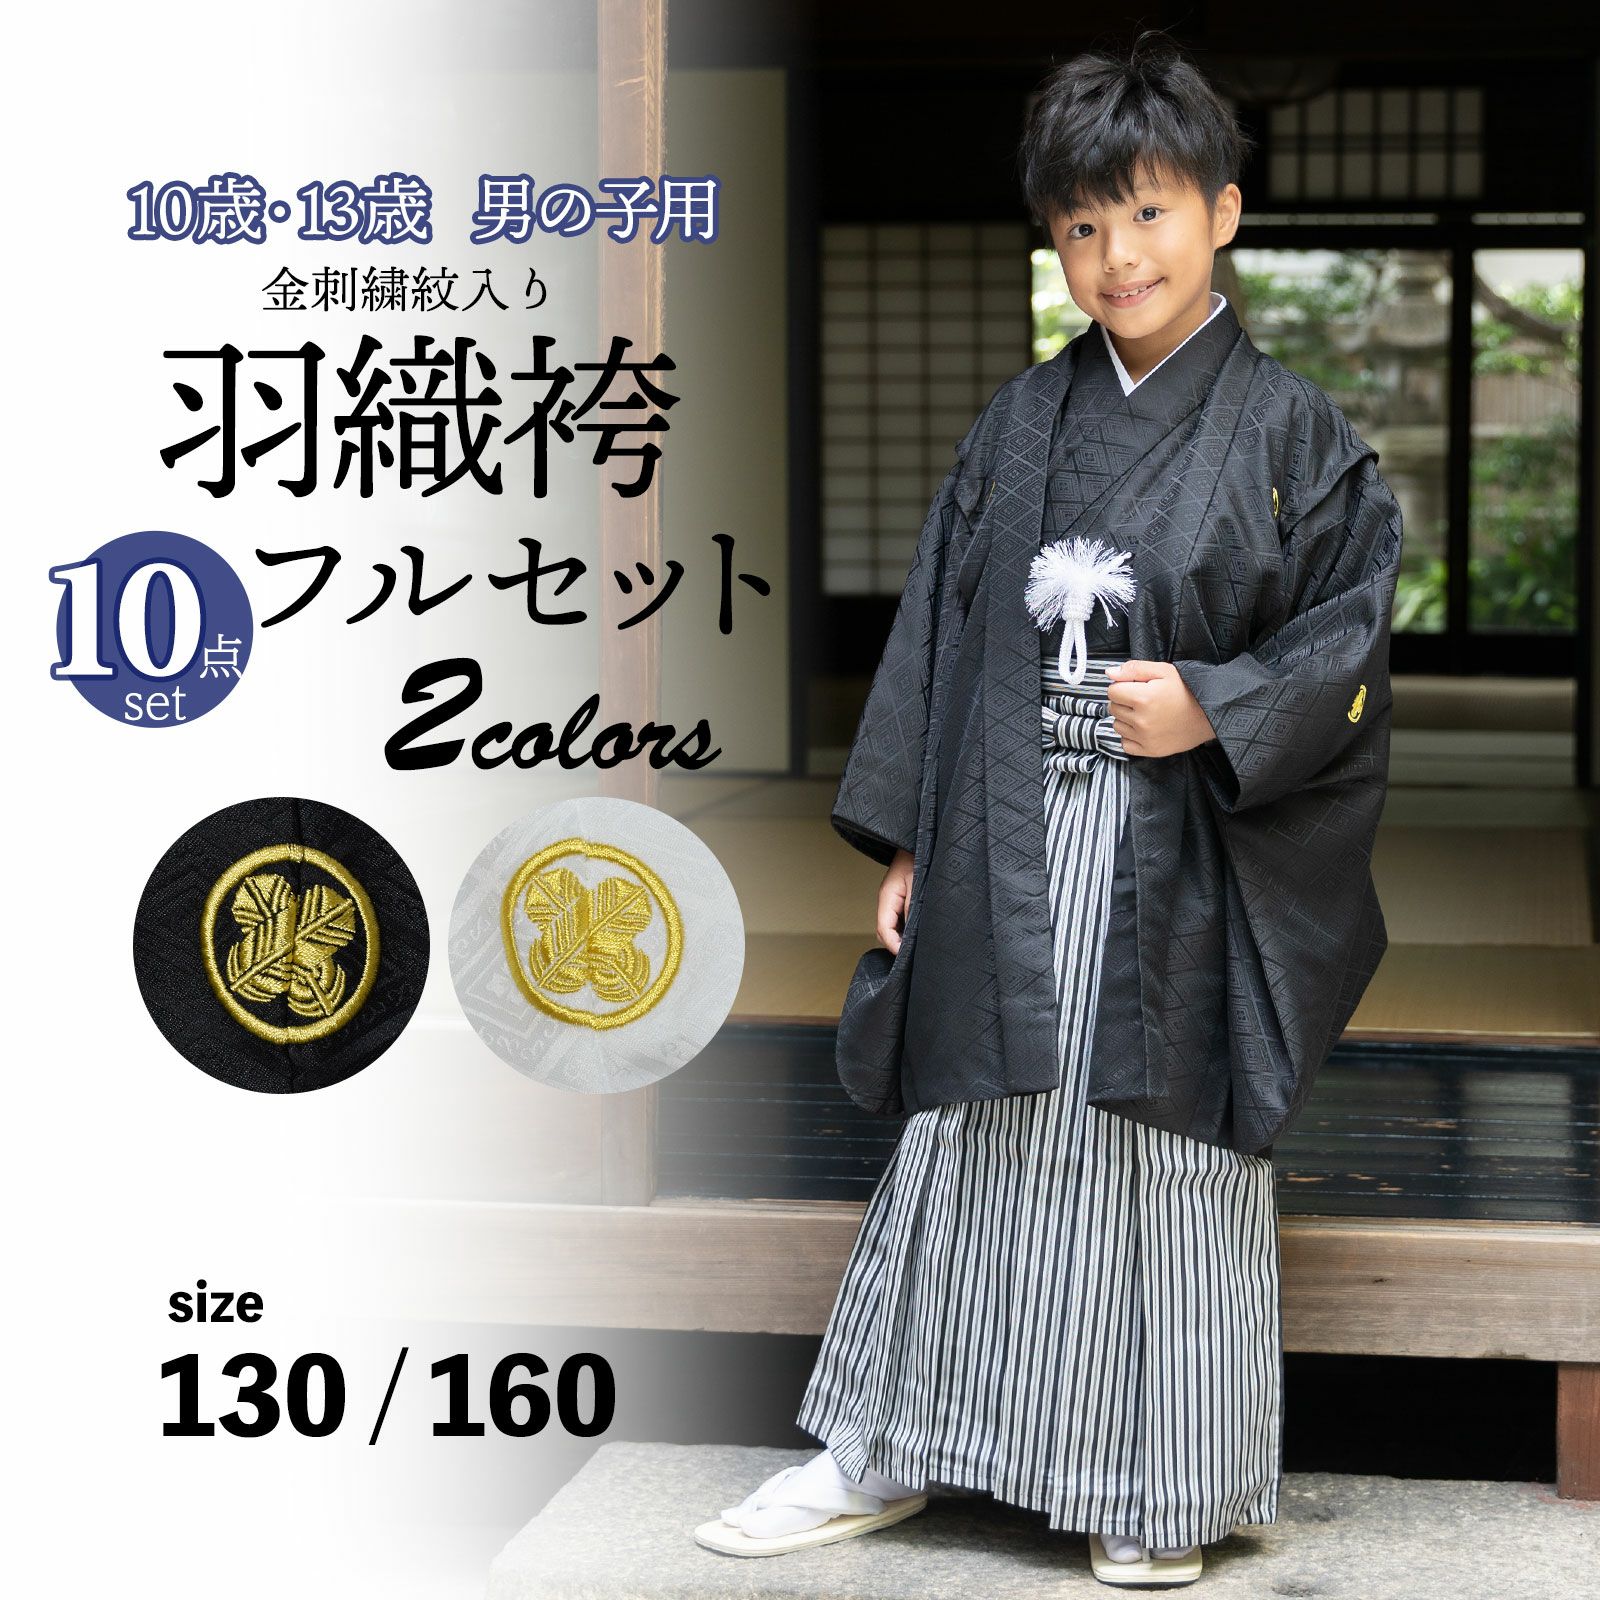 男の子 10歳 13歳 金刺繍紋入り 羽織袴セット 「黒・白 菱、金刺繍紋